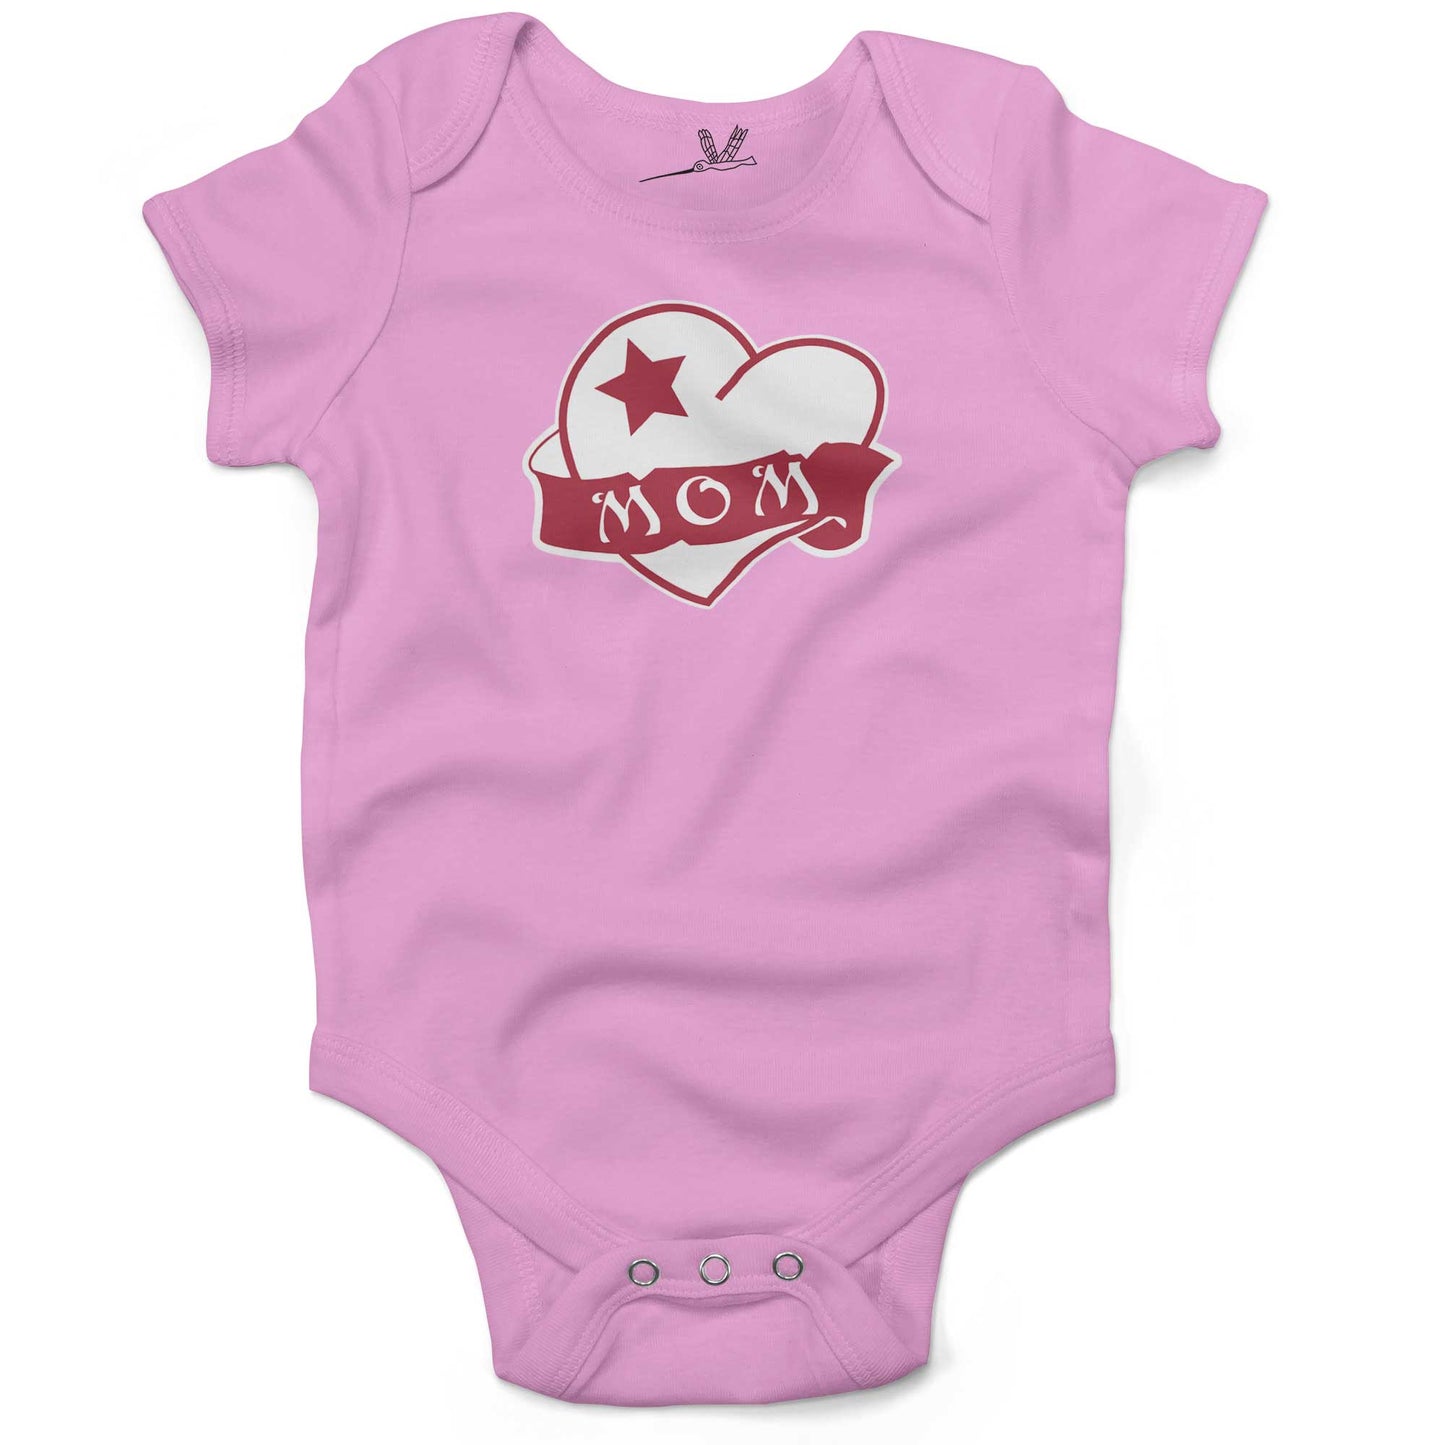 Mom Tattoo Heart Infant Bodysuit or Raglan Tee-Organic Pink-3-6 months